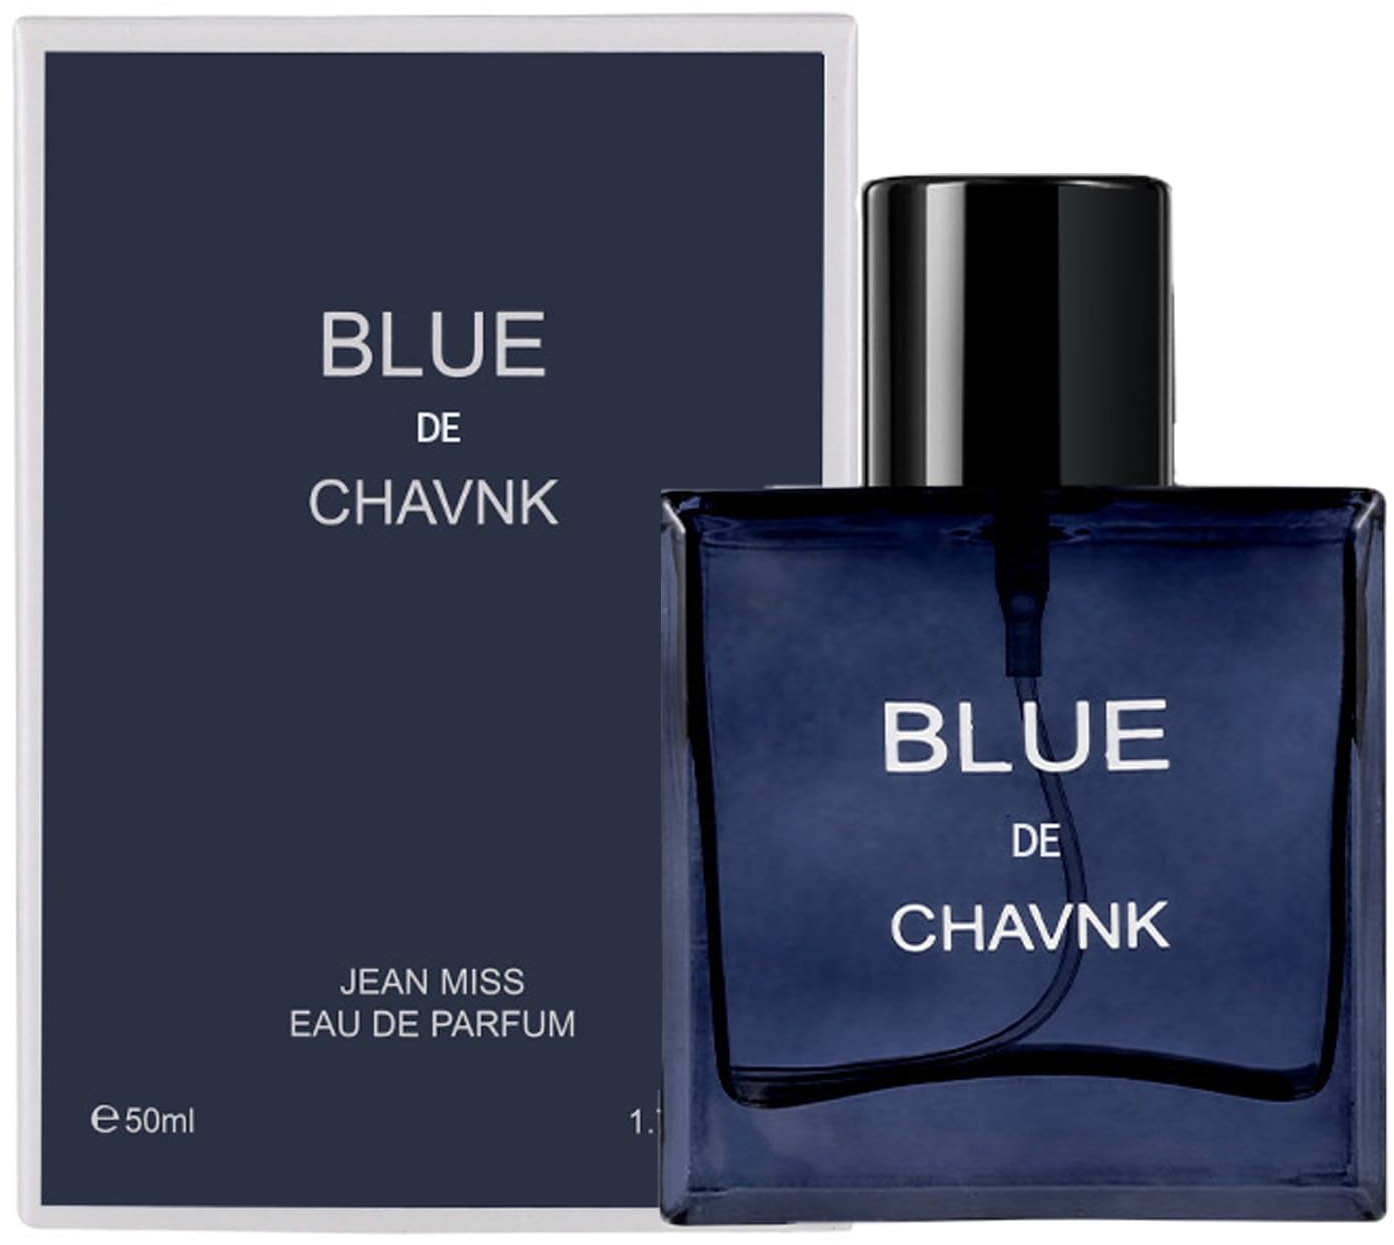 Flysmus Blue De Lurex Pheromone Cologne for Men, Pheromone Cologne For Men Attract Women, Men Feromone Perfume, Pheromones For Men To Attract Women Body Spray (50ml)